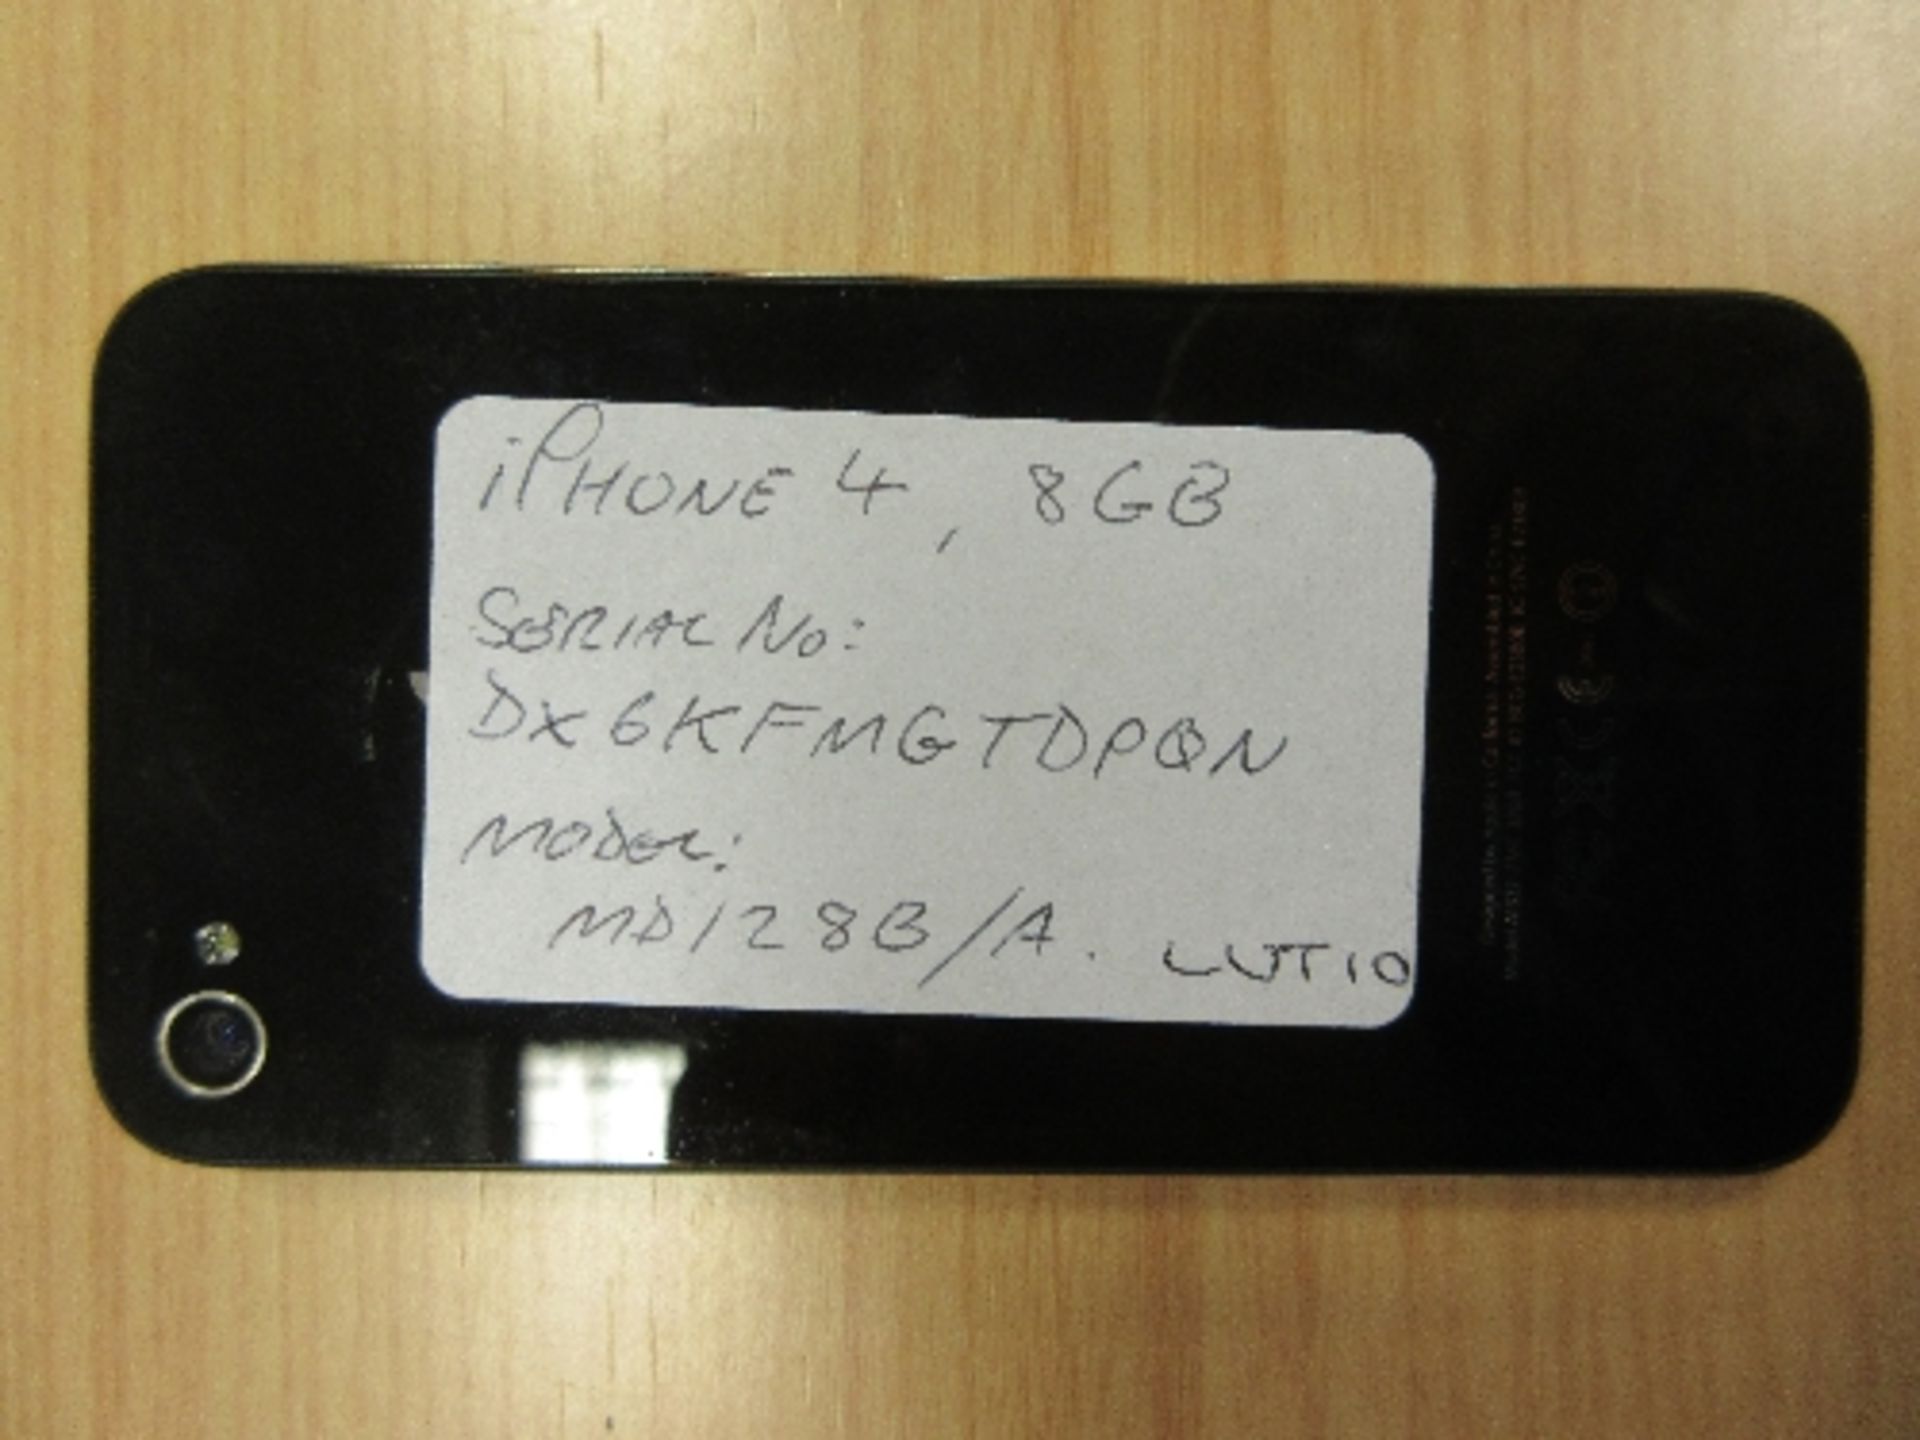 iPhone 4, 8GB, Serial No. DX6KFMGTDPQN, Model MD128B/A - Image 2 of 2